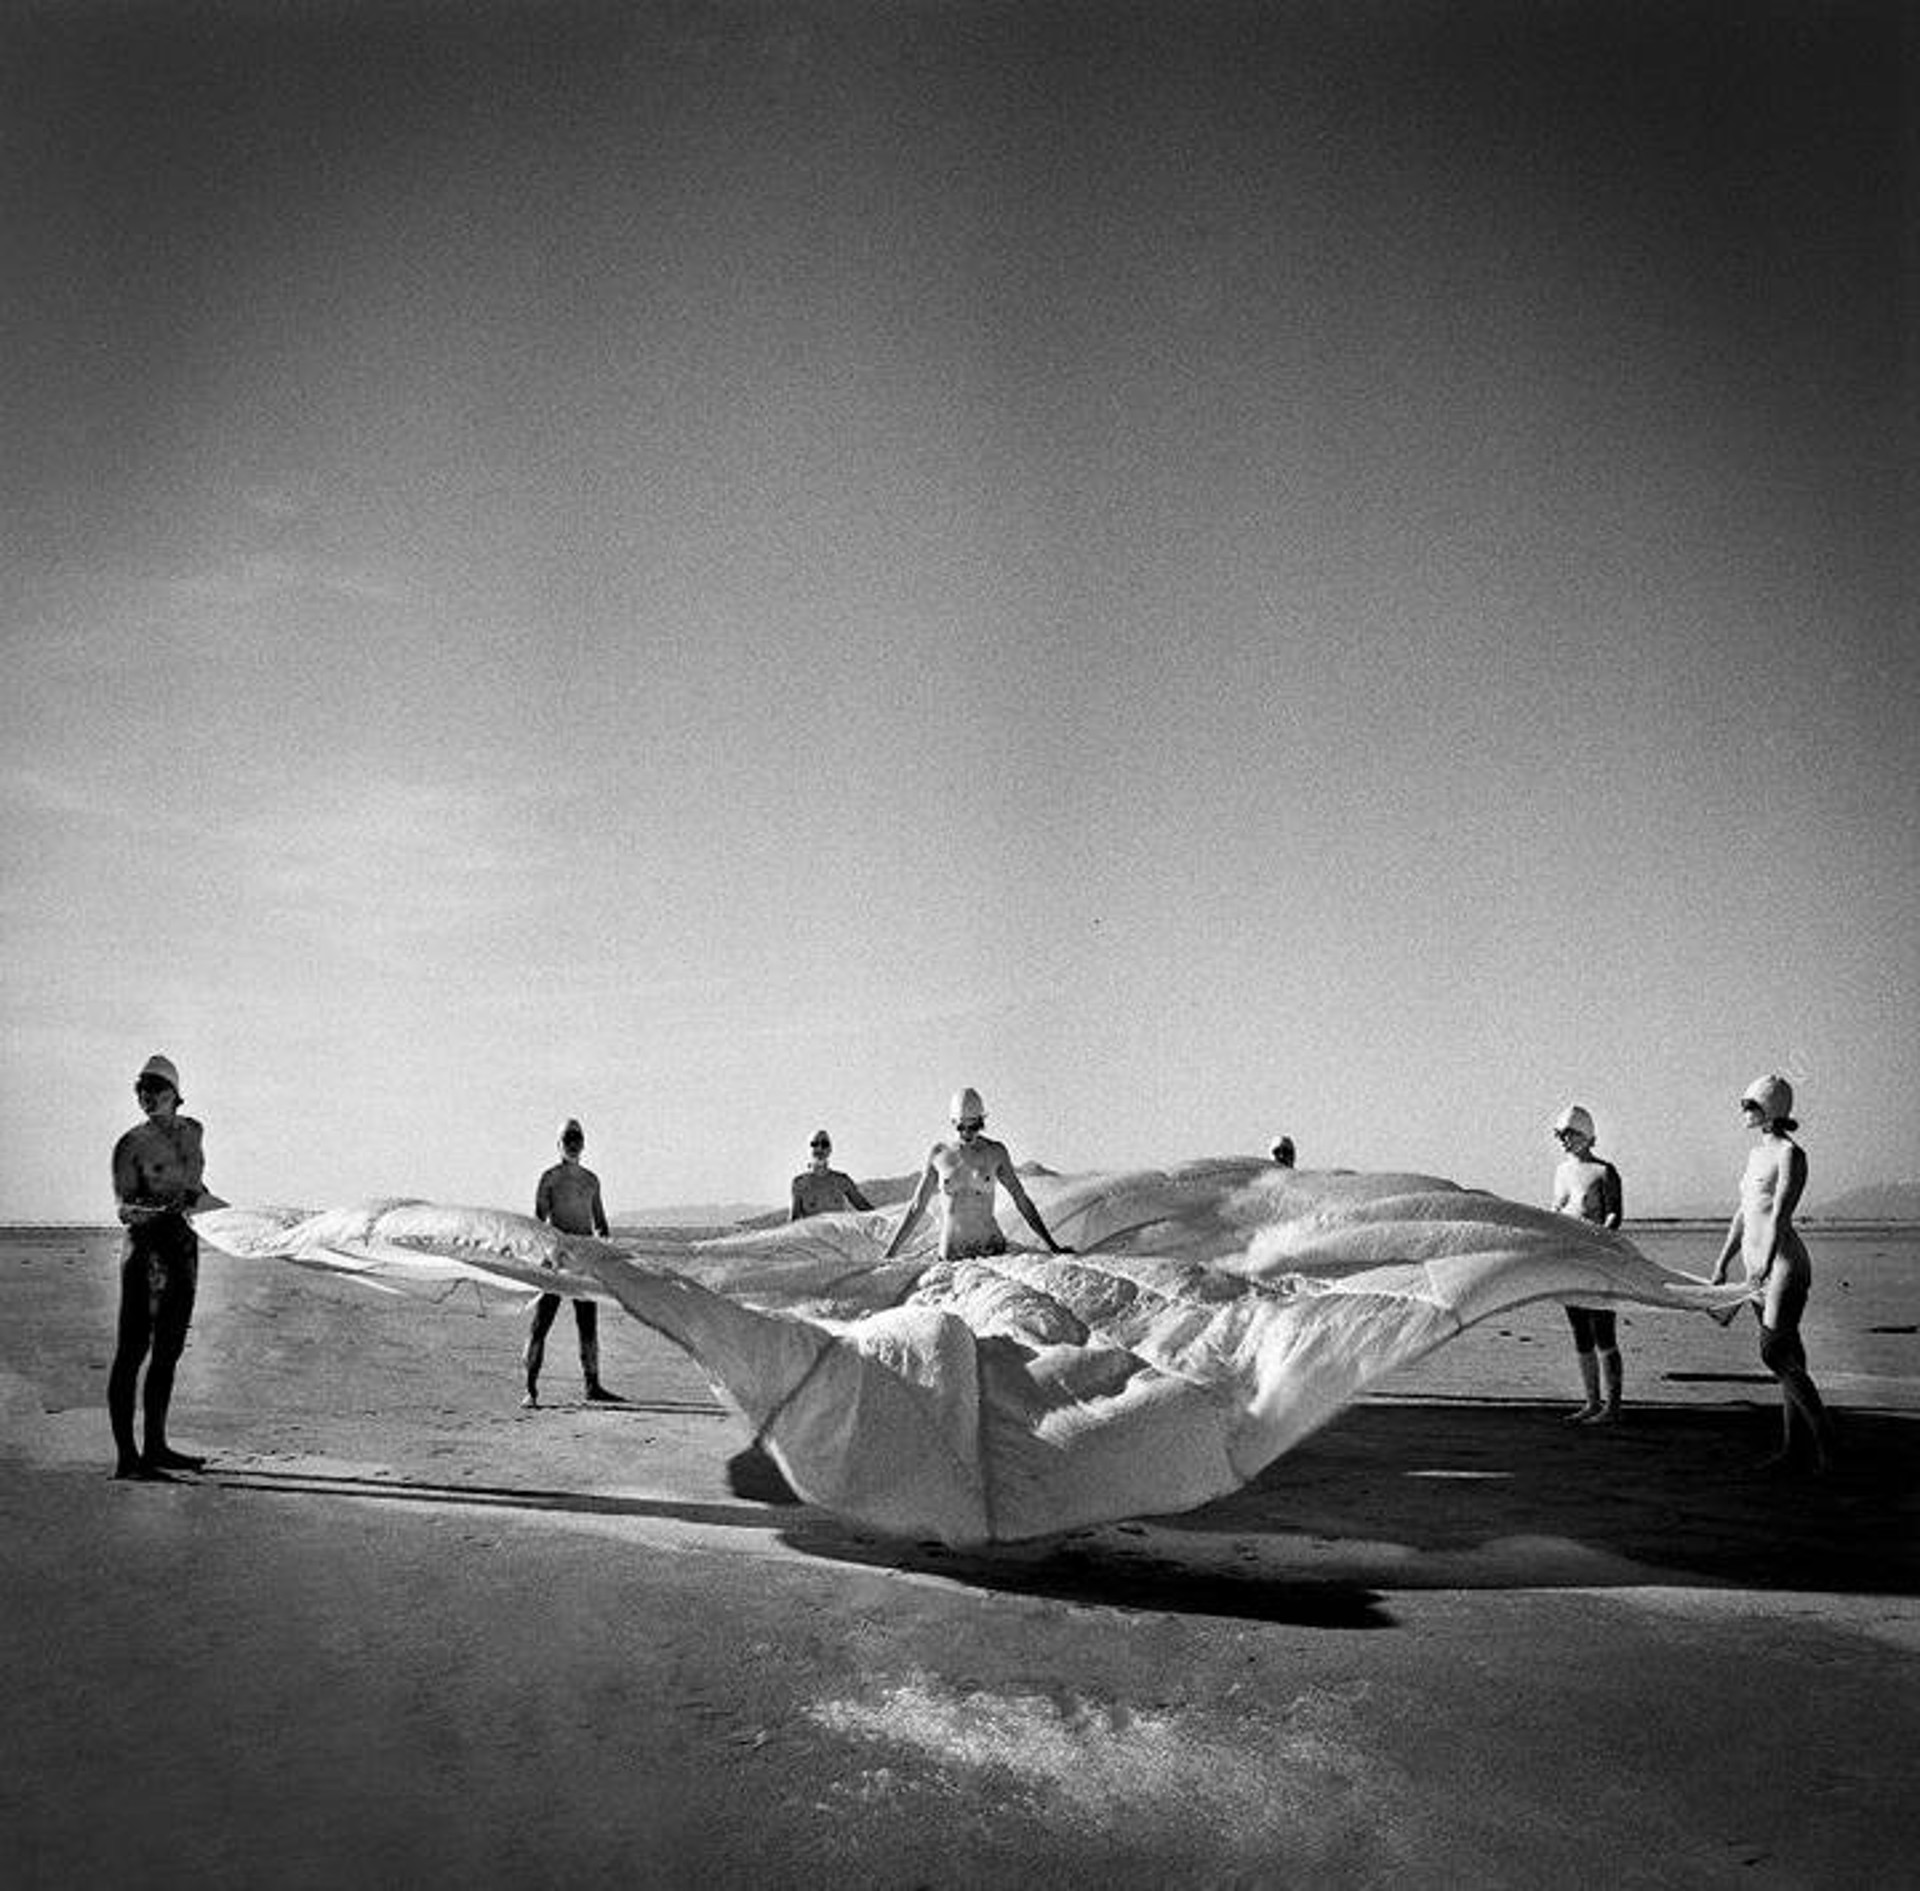 Parachute by Teresa Flowers